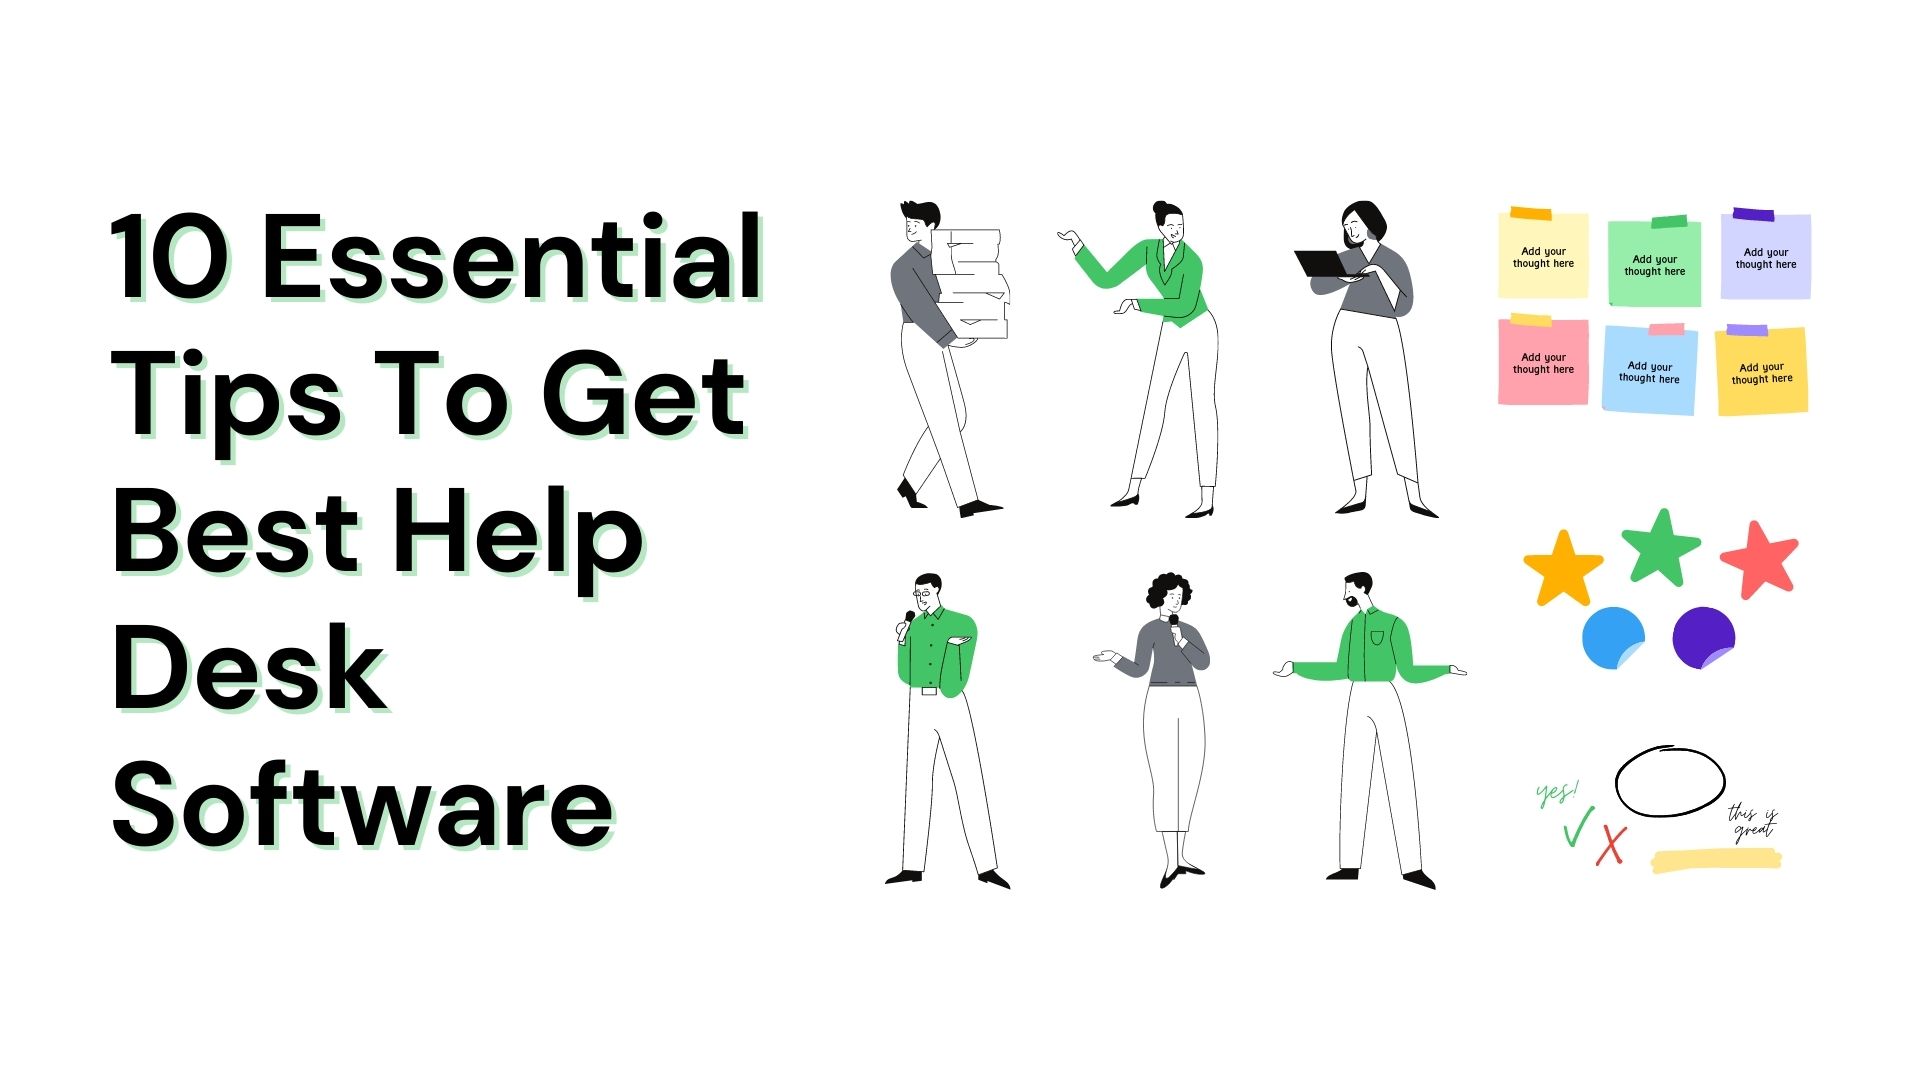 10 Essential Tips To Get Best Help Desk Software